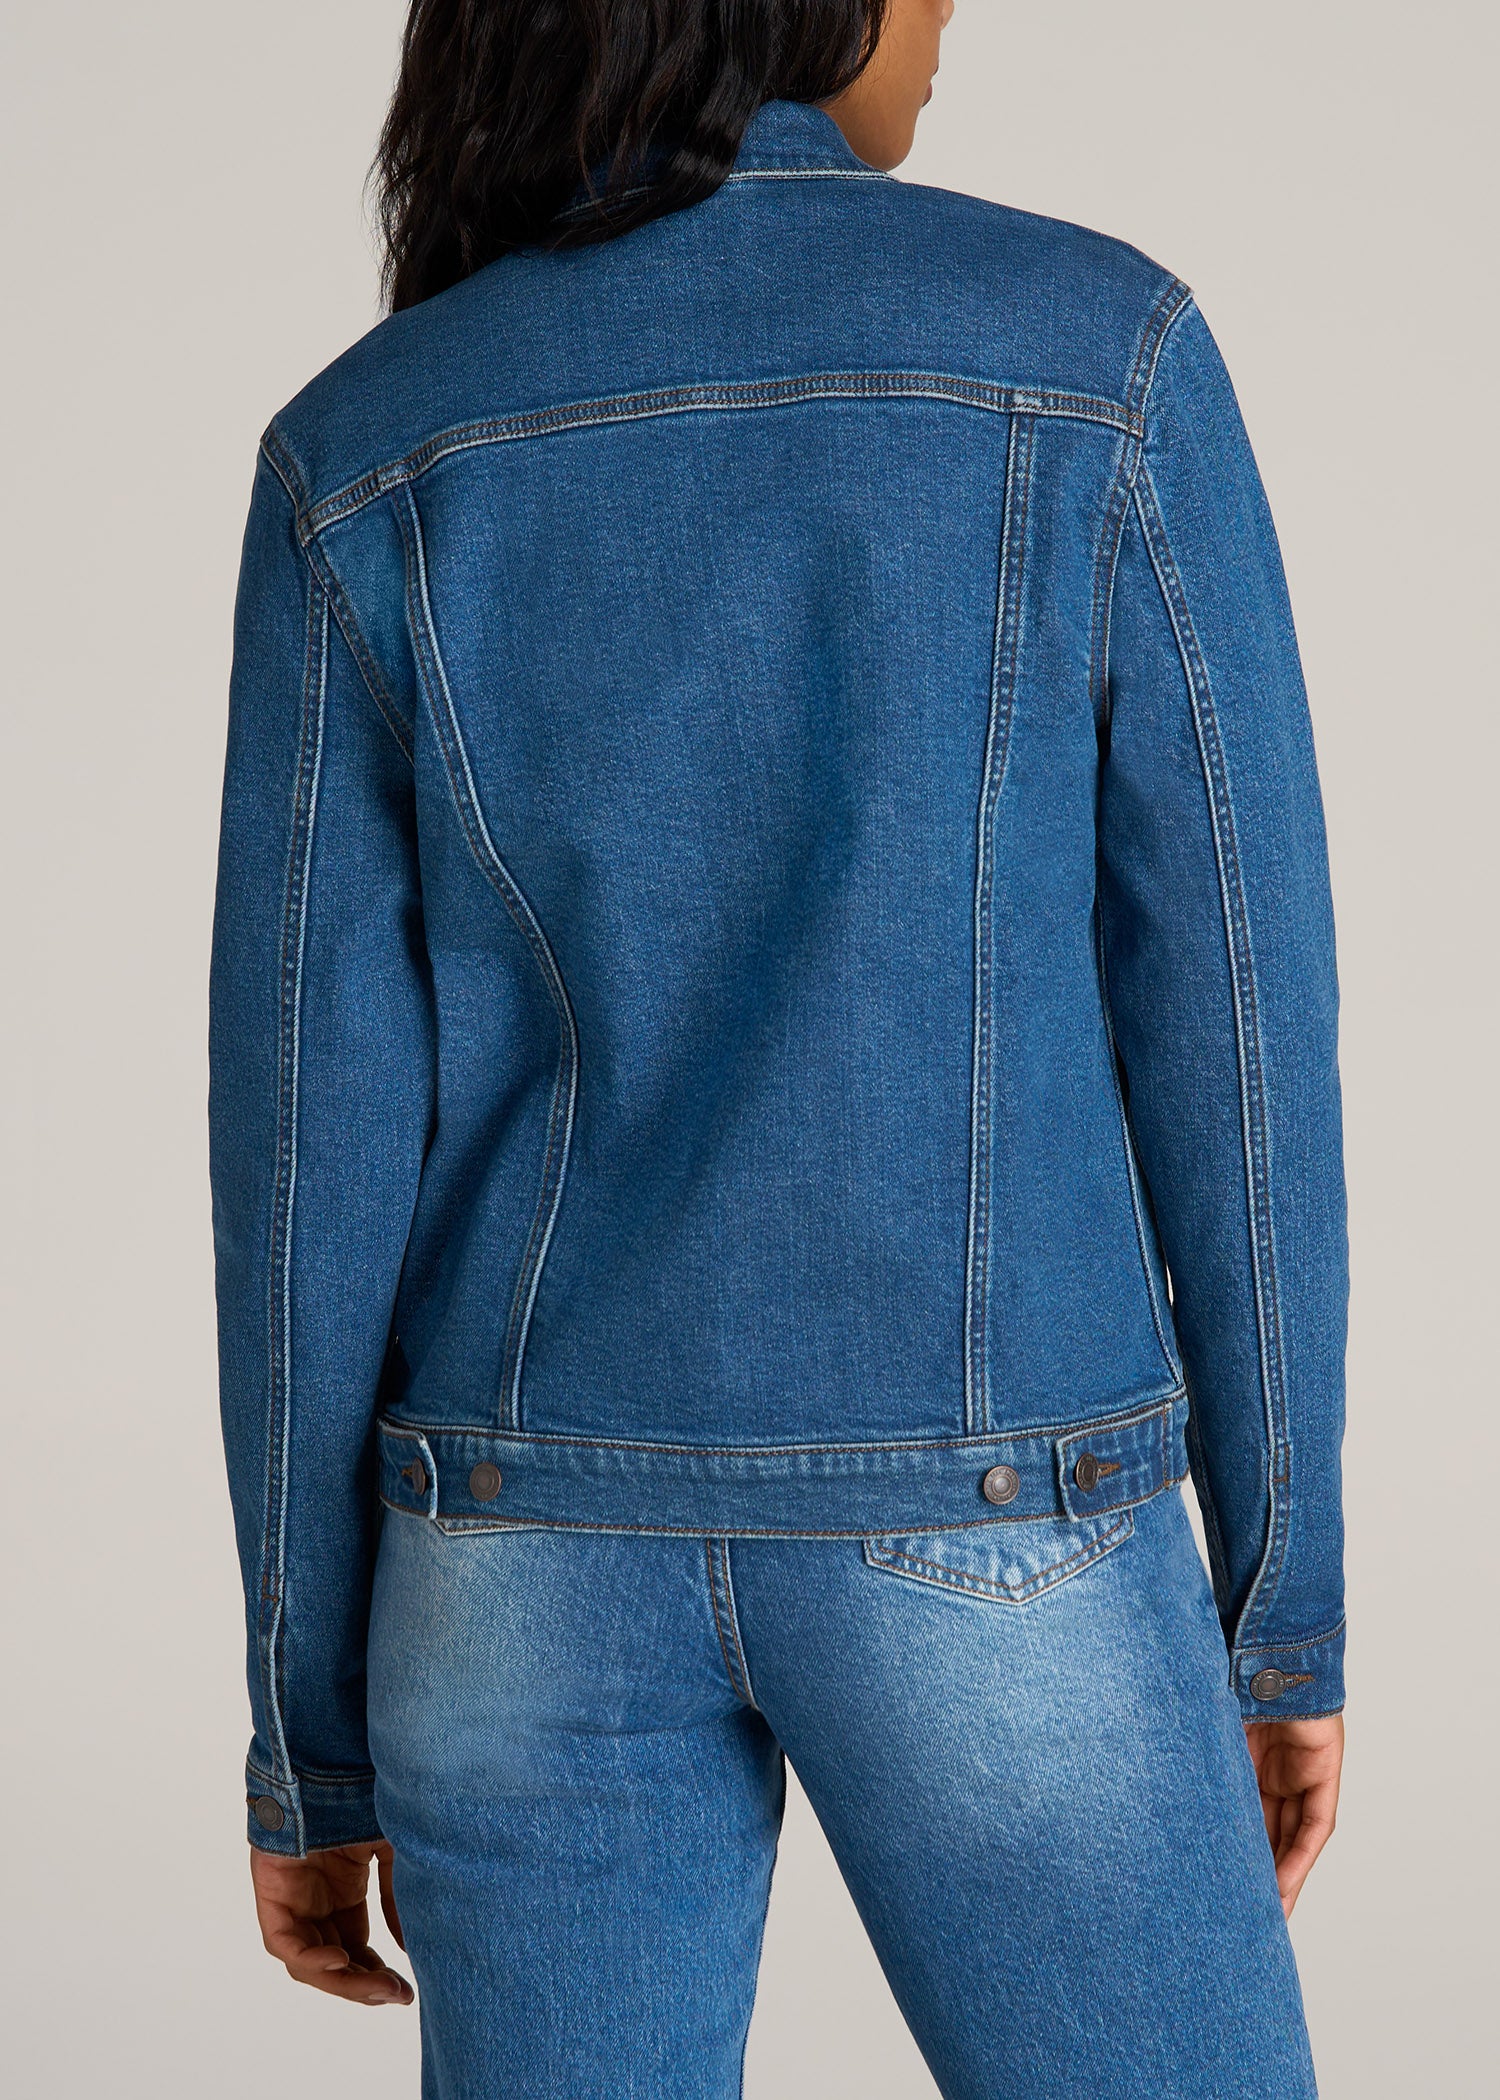 Women's Tall Denim Jacket in Vintage Medium Blue